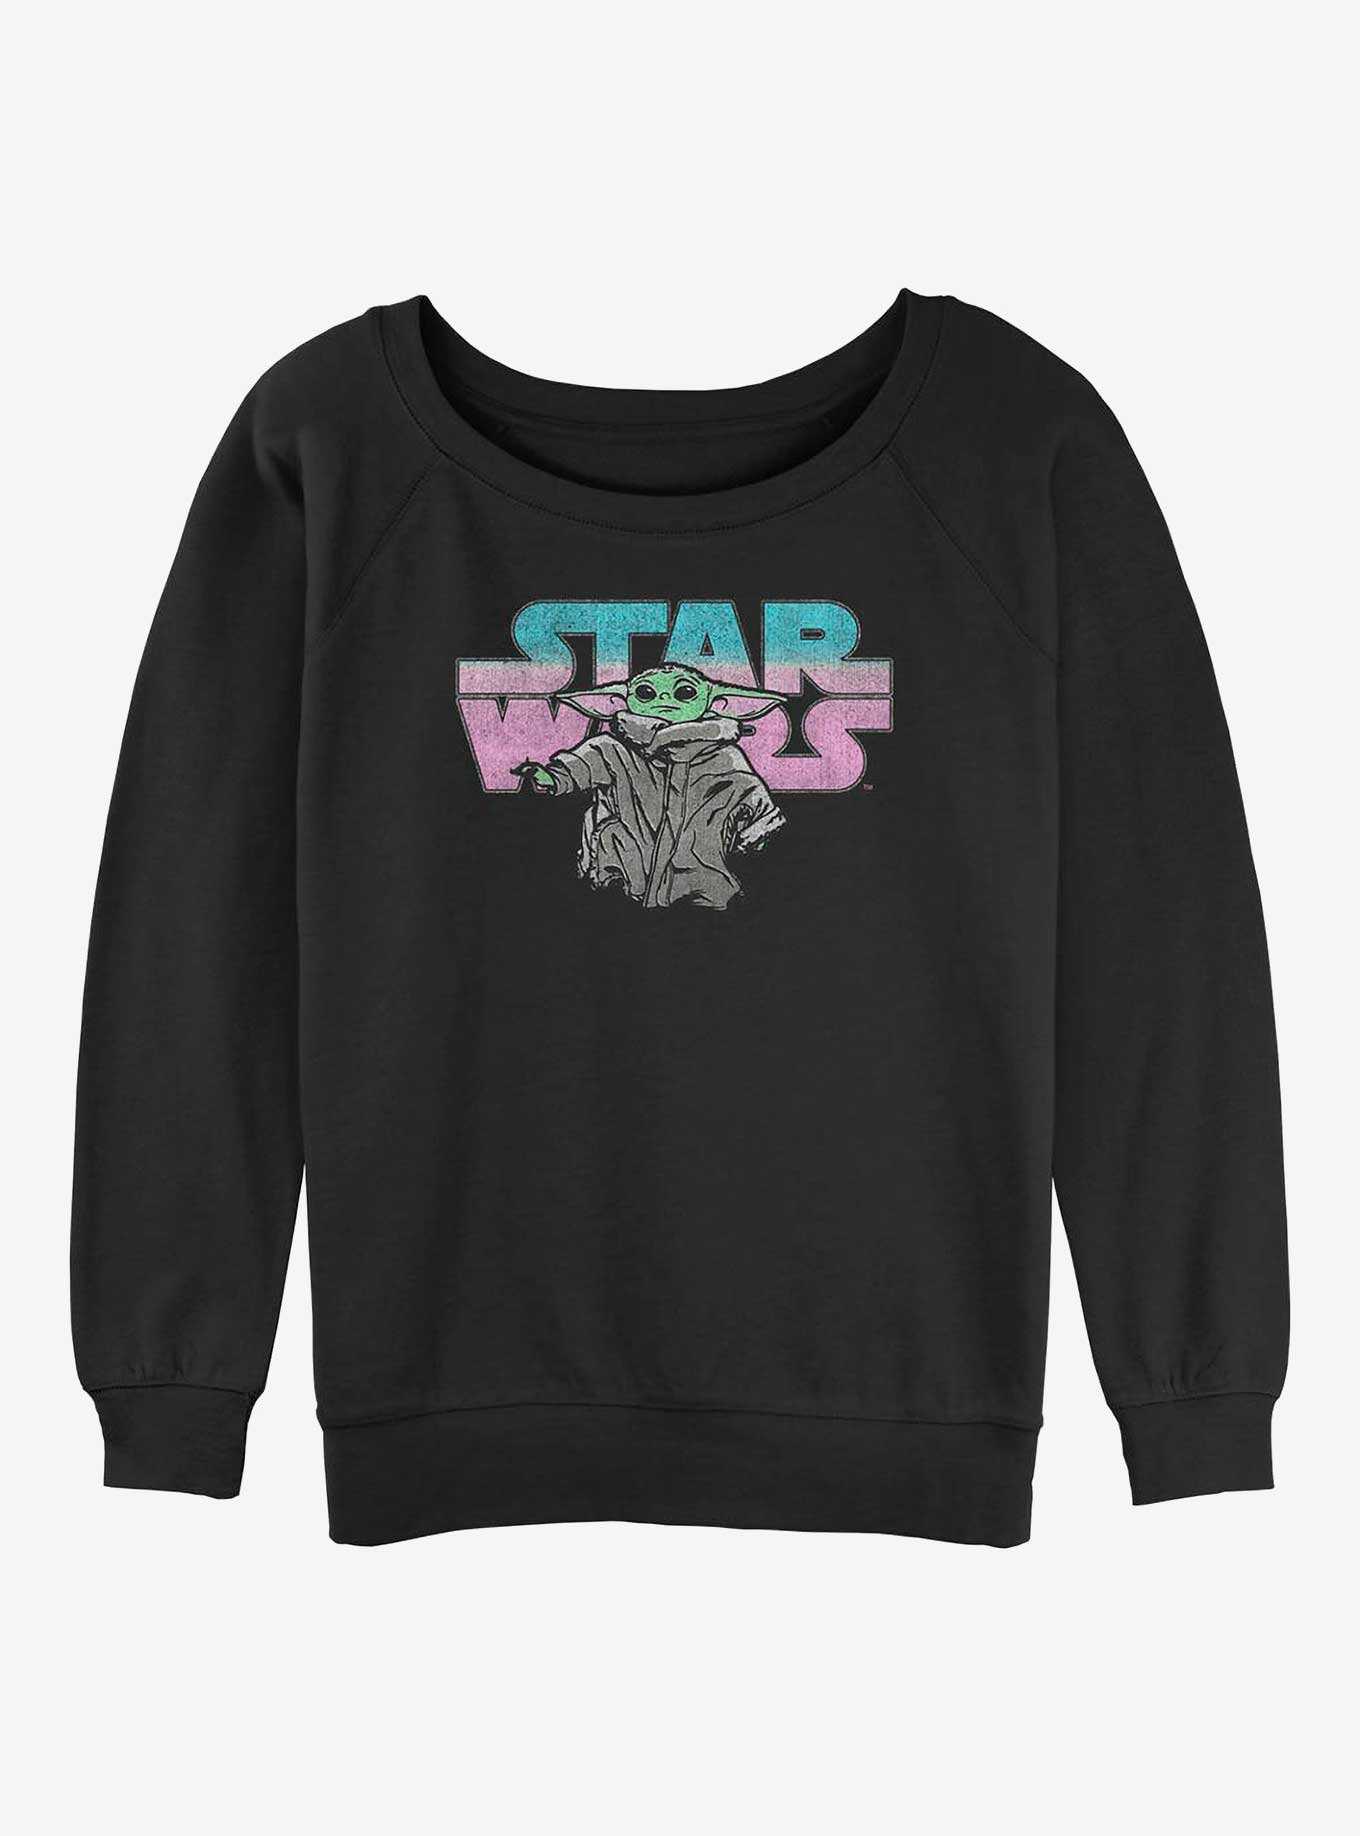 Star Wars The Mandalorian Logo Child Womens Slouchy Sweatshirt, , hi-res